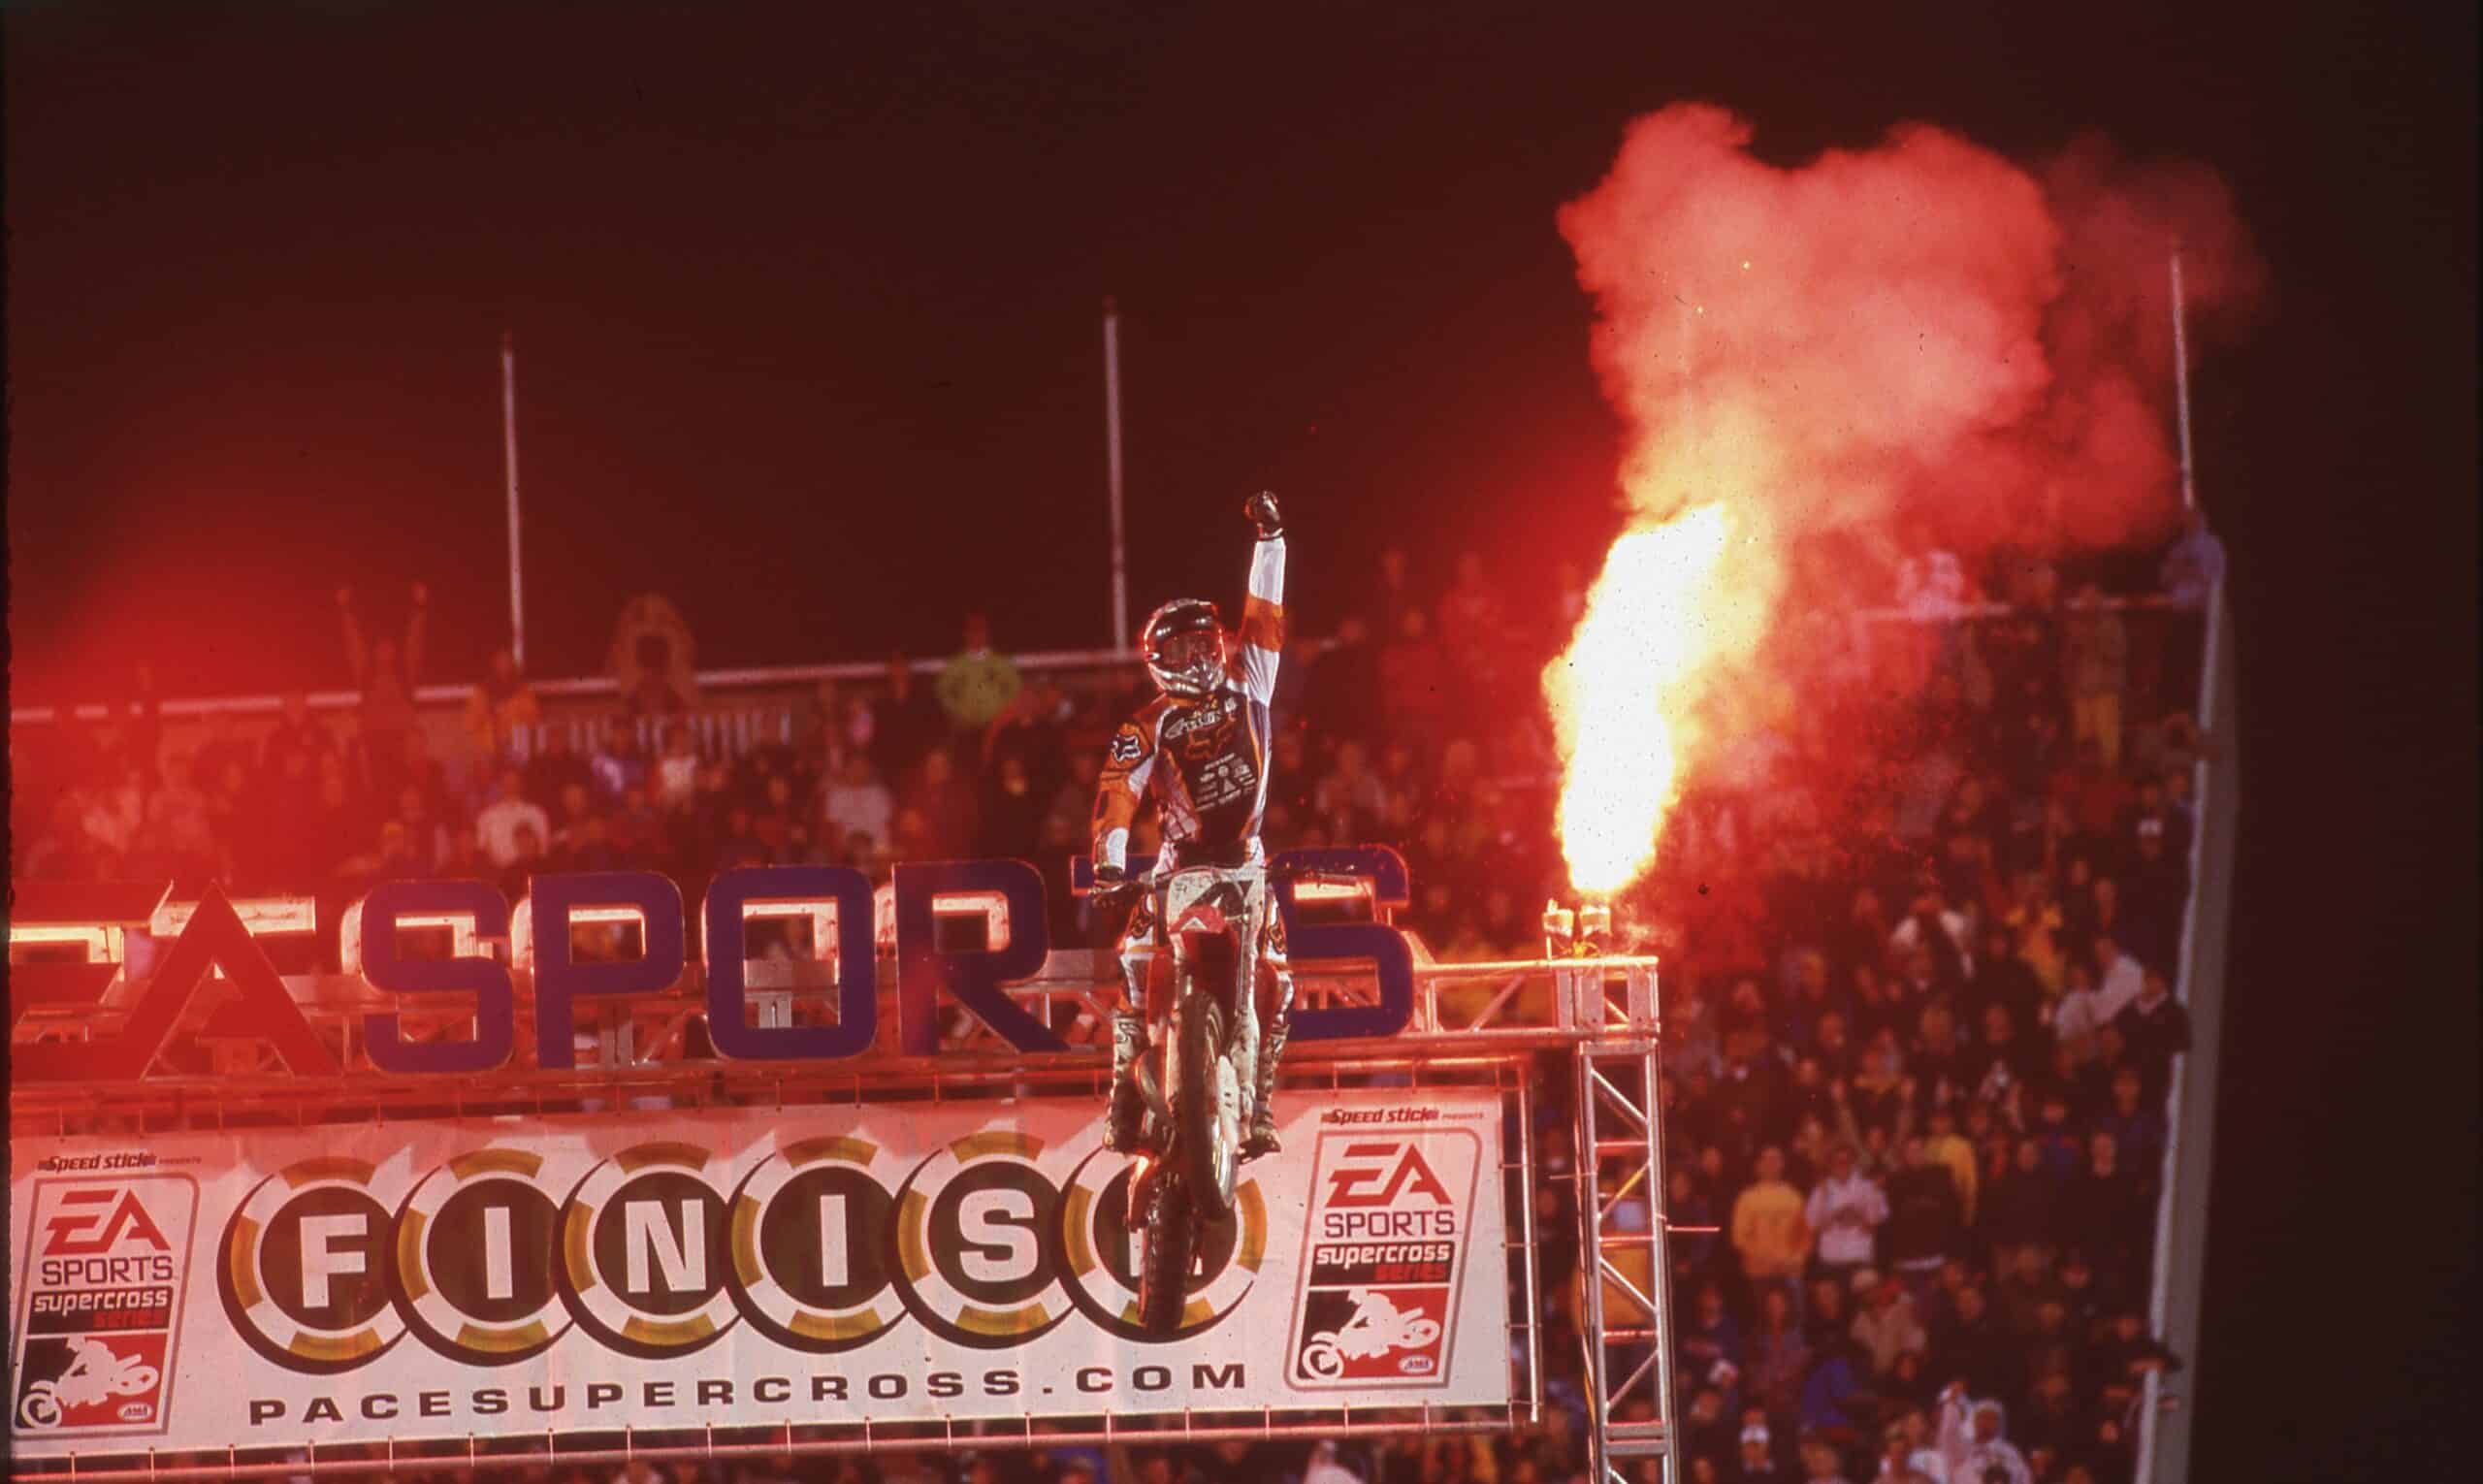 Ricky Carmichael wins the 2002 Salt Lake City Supercross. Photo: Kenji Shimoda